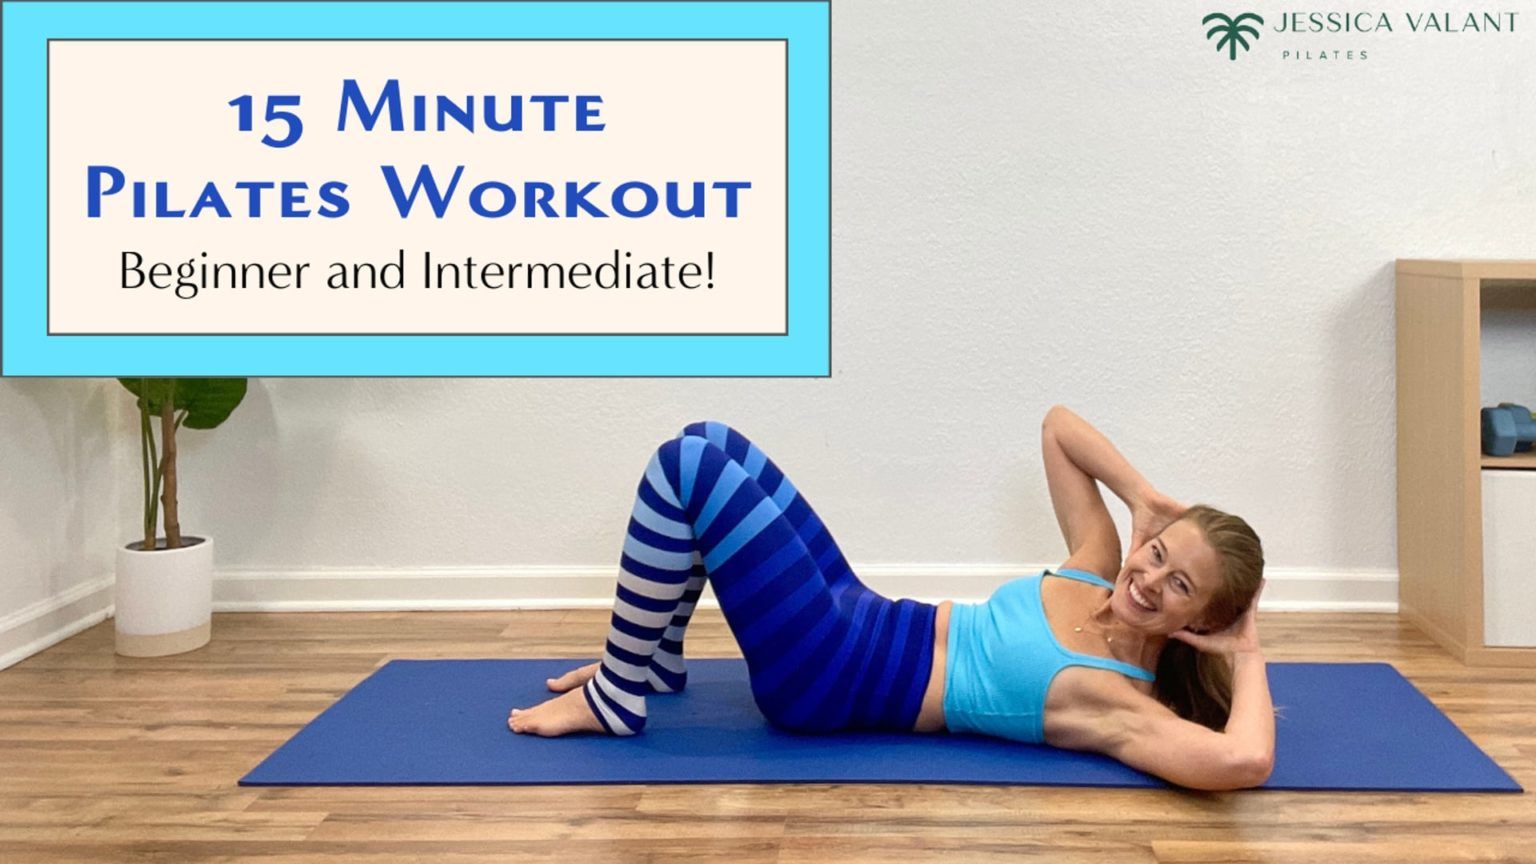 15 Minute Pilates Workout Beginner Intermediate Jessica Valant